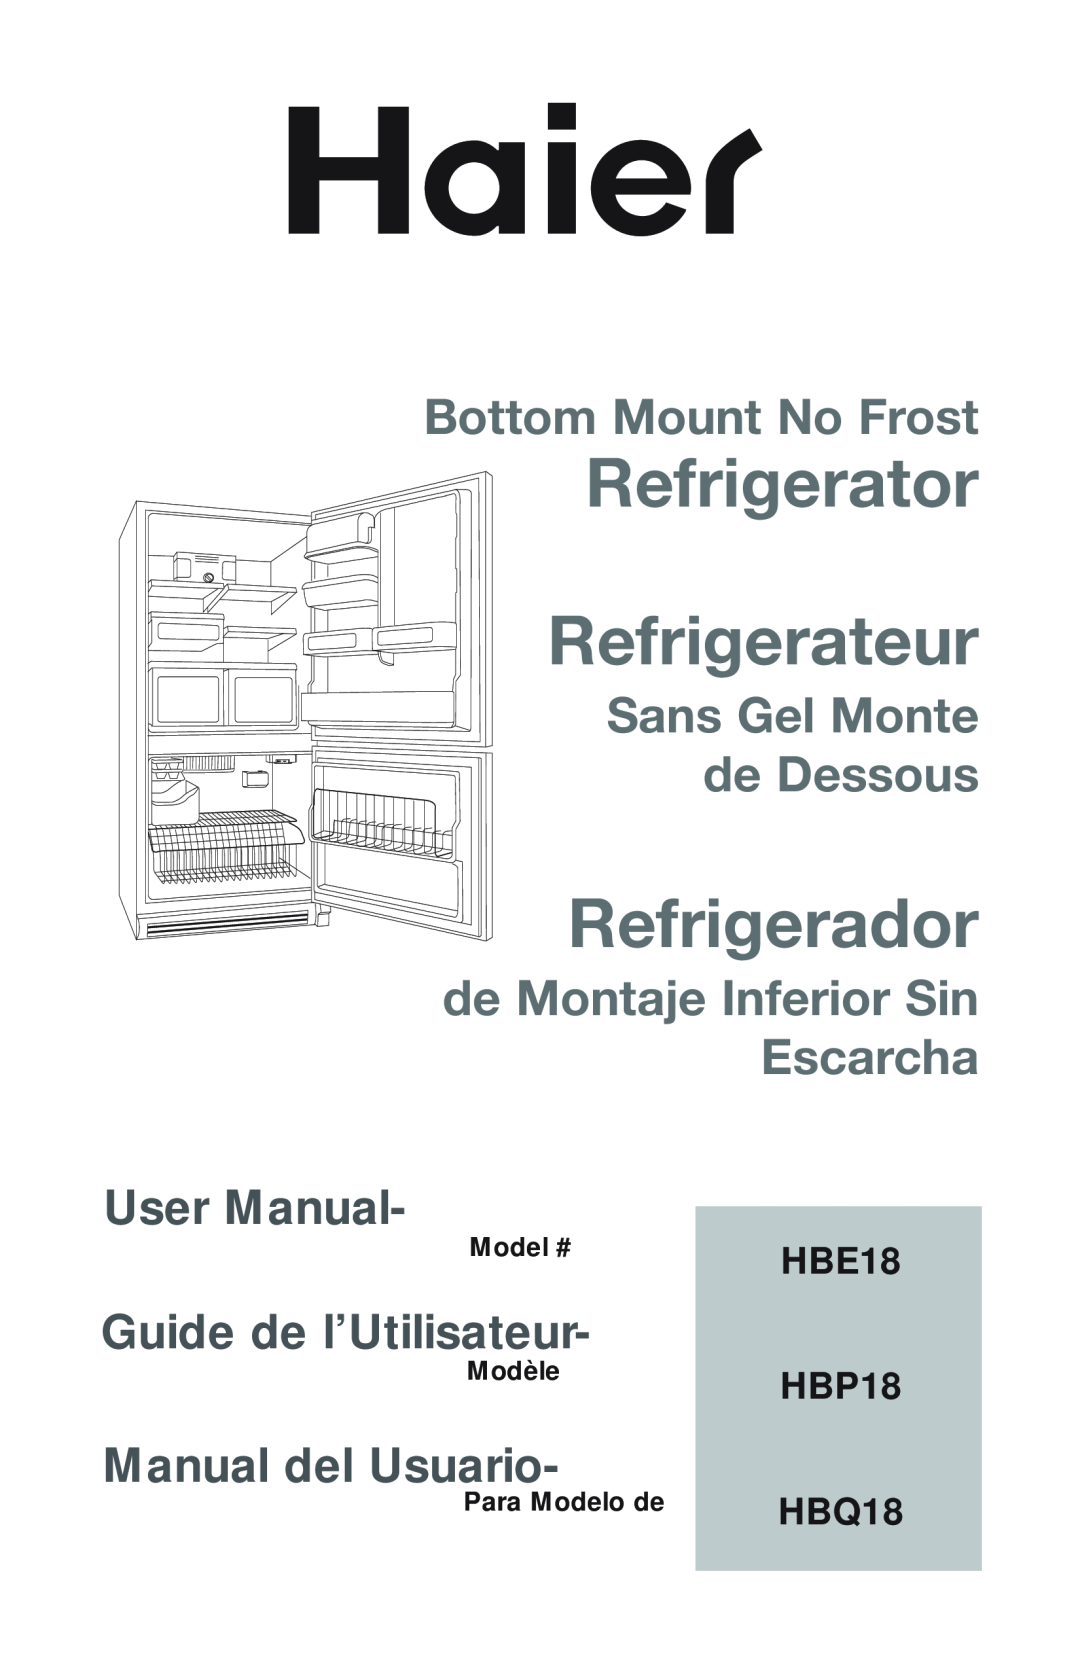 Haier HBP18 user manual Refrigerator Refrigerateur, Refrigerador, Bottom Mount No Frost, Sans Gel Monte de Dessous, HBE18 